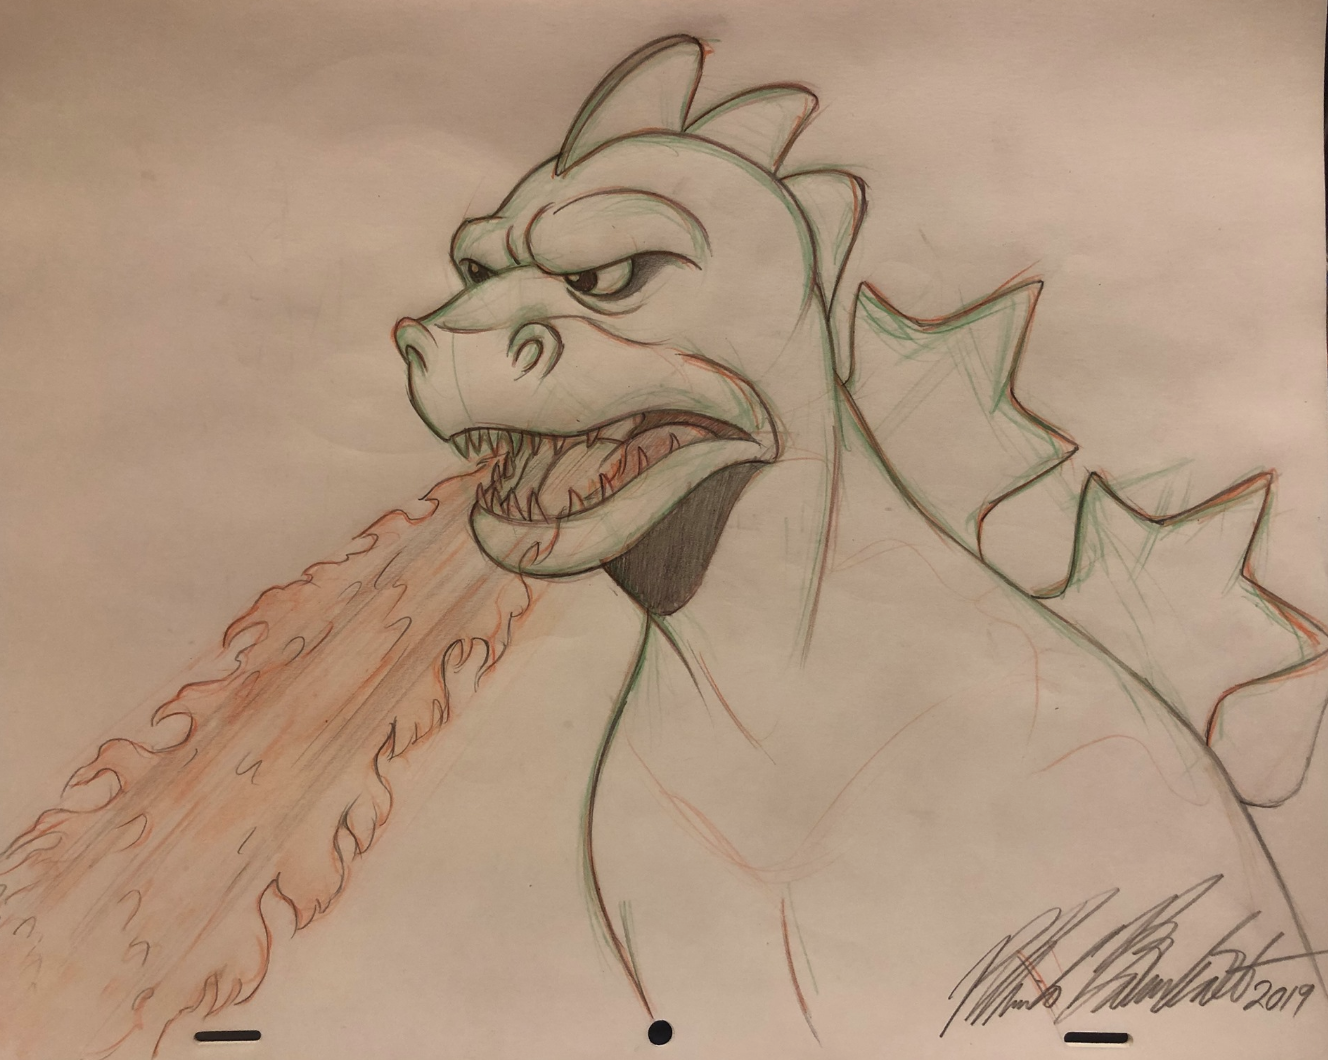 How To Draw Godzilla - Kawaii Art - Easy Step By Step Guide